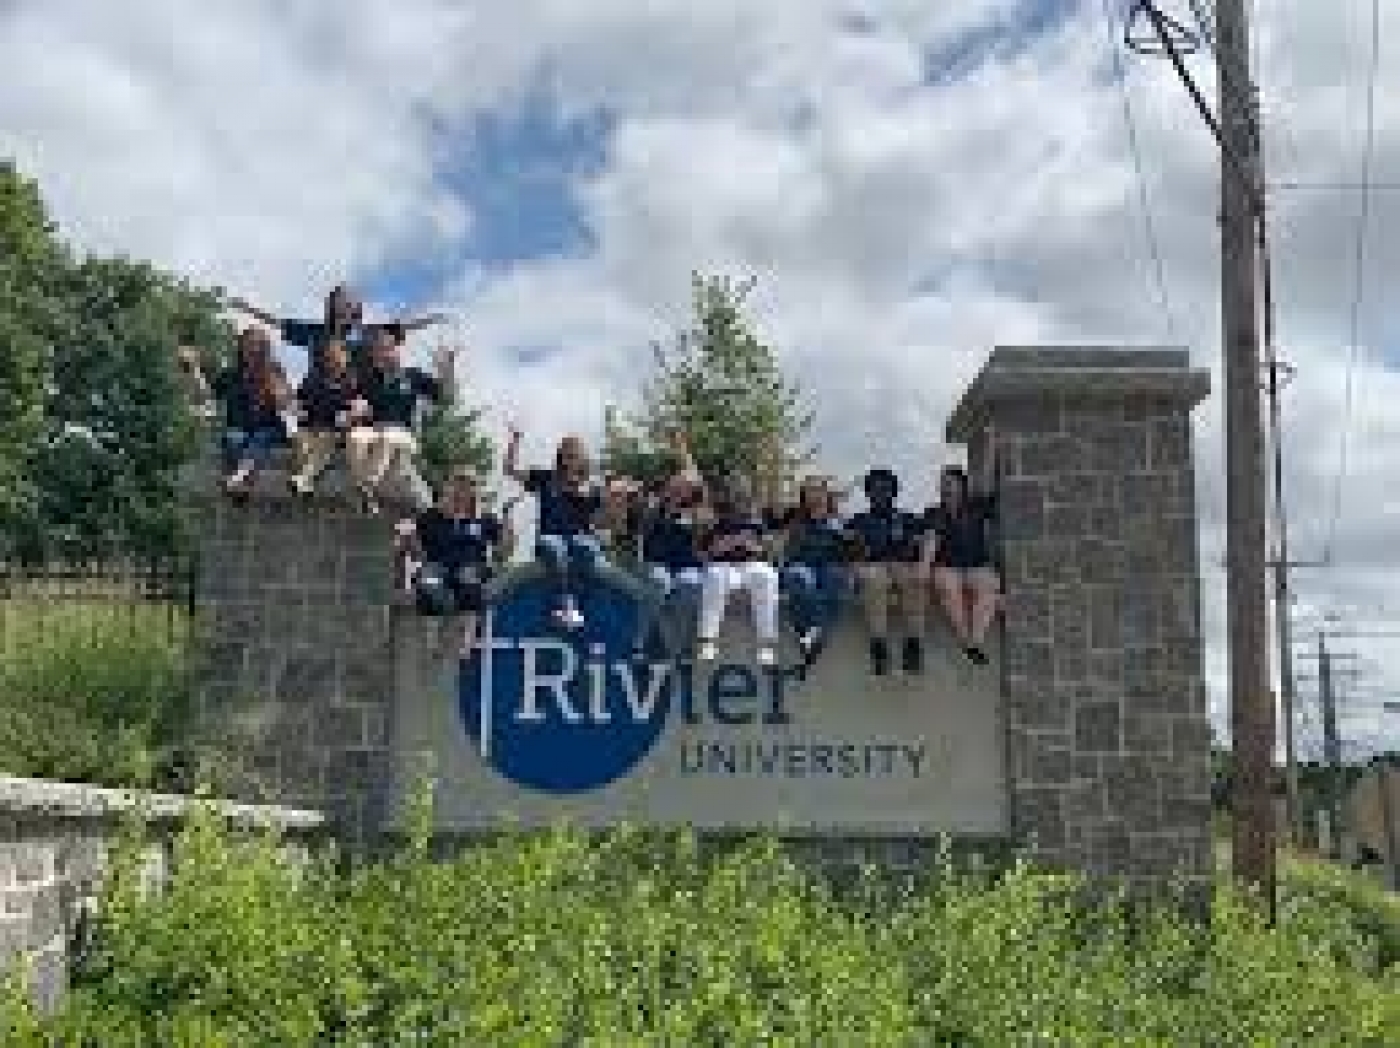 EDUCO - Rivier University